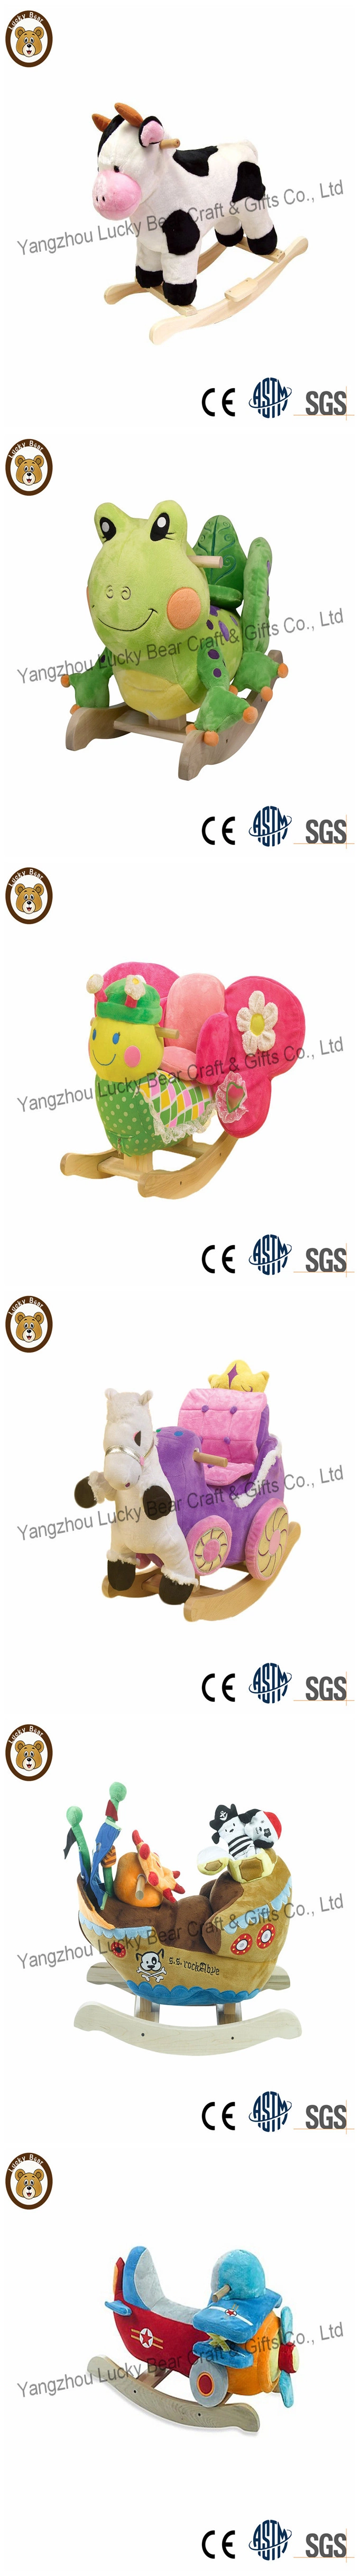 Small Kids Animal Shape Rocking Horse Chair Children Plush Toys Soft Toddler Toys